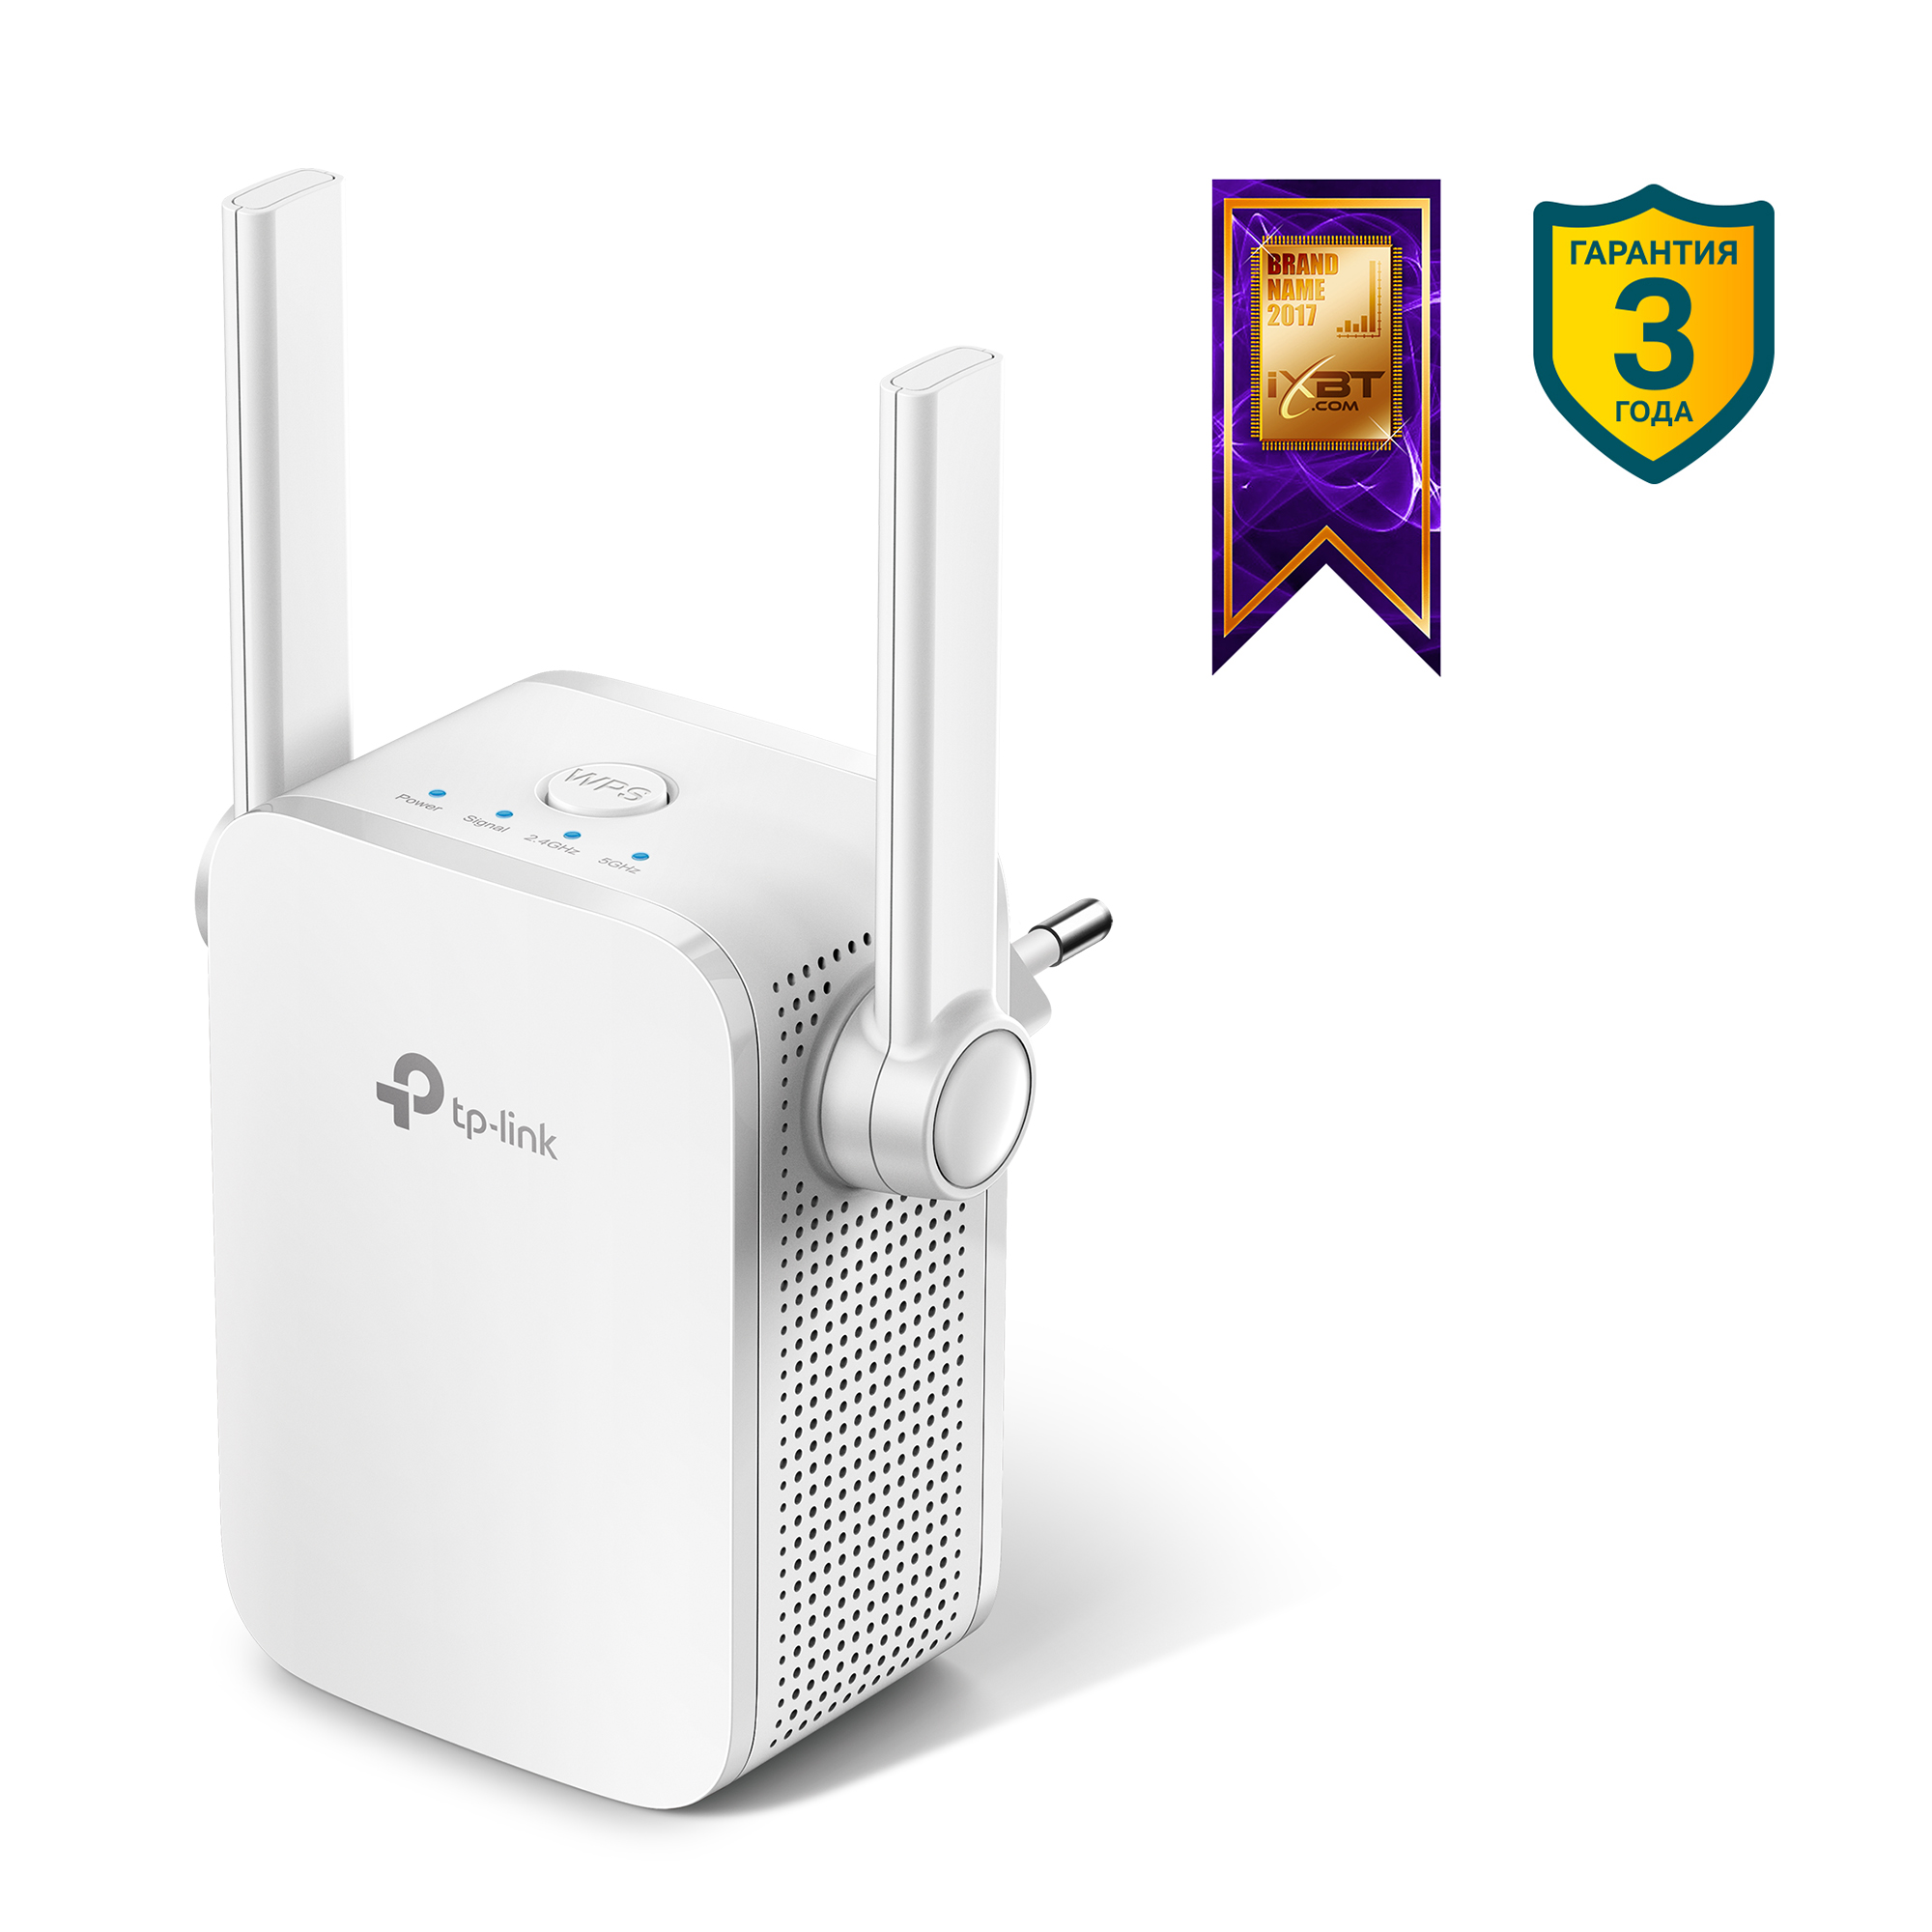 Усилитель Wi-Fi TP-Link RE205 AC750 Wi-Fi Range Extender, Wall Plugged,  433Mbps at 5GHz + 300Mbps at 2.4GHz, 802.11ac/a/b/g/n, 1 10/100M LAN, WPS but